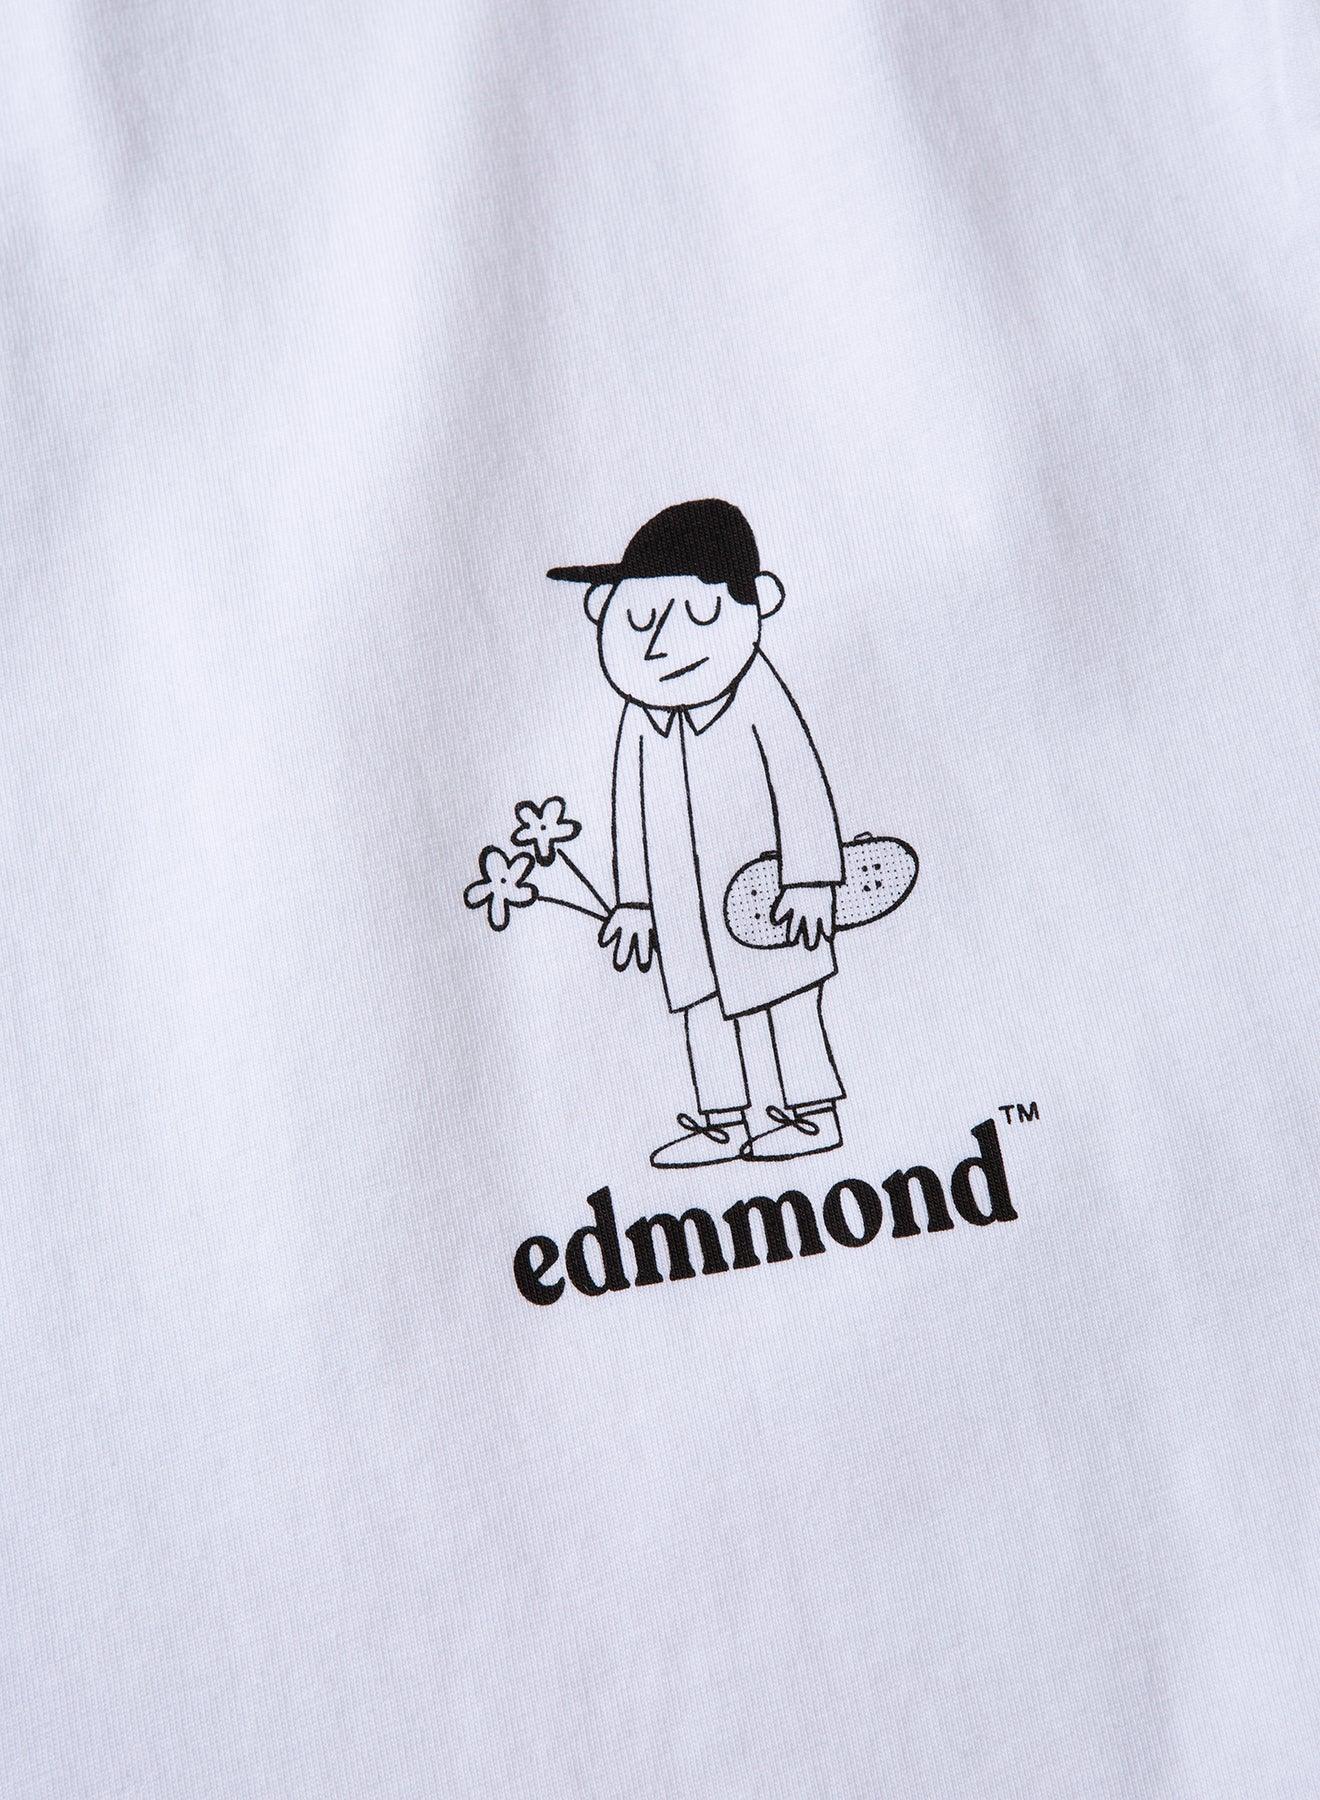 Camiseta Little Ted Plain White - ECRU